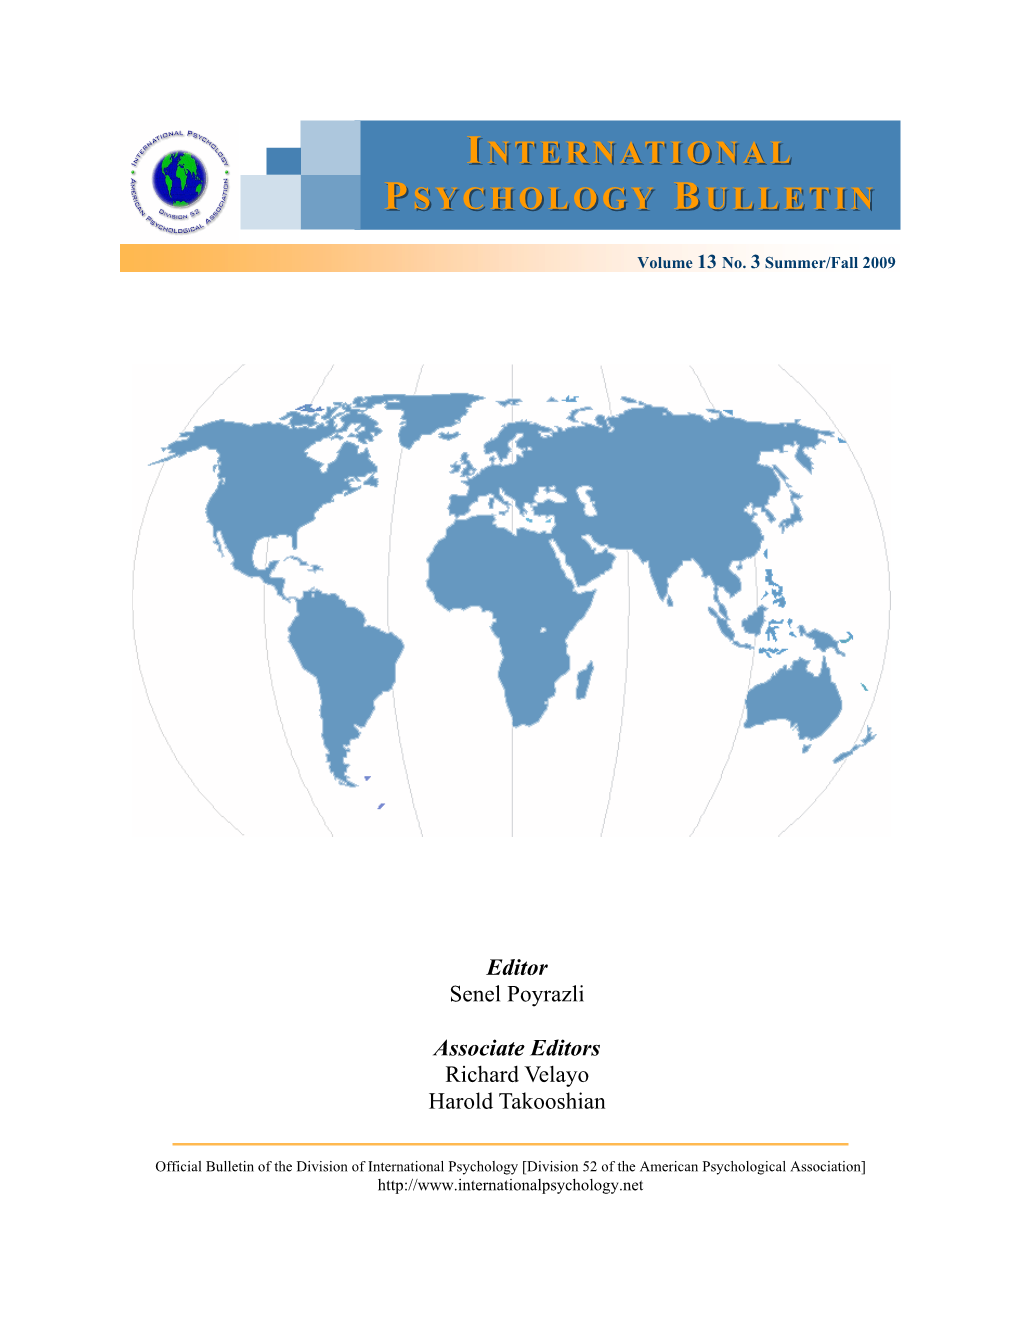 International Psychology Bulletin (Volume 13, No